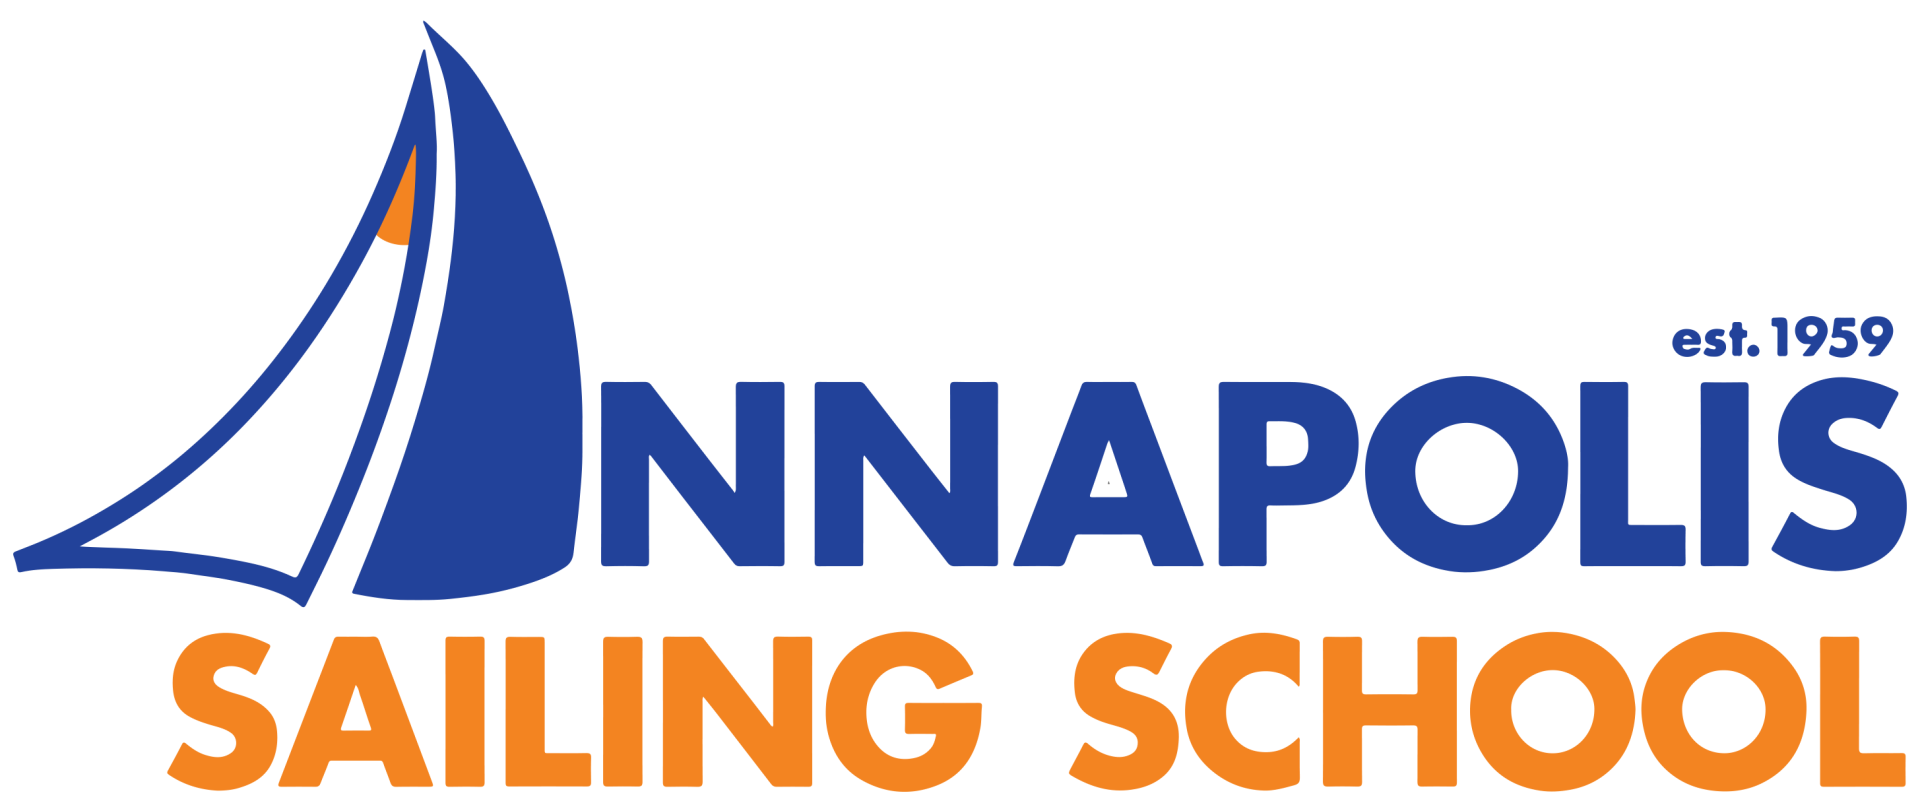 Annapolis Sailing School Logo